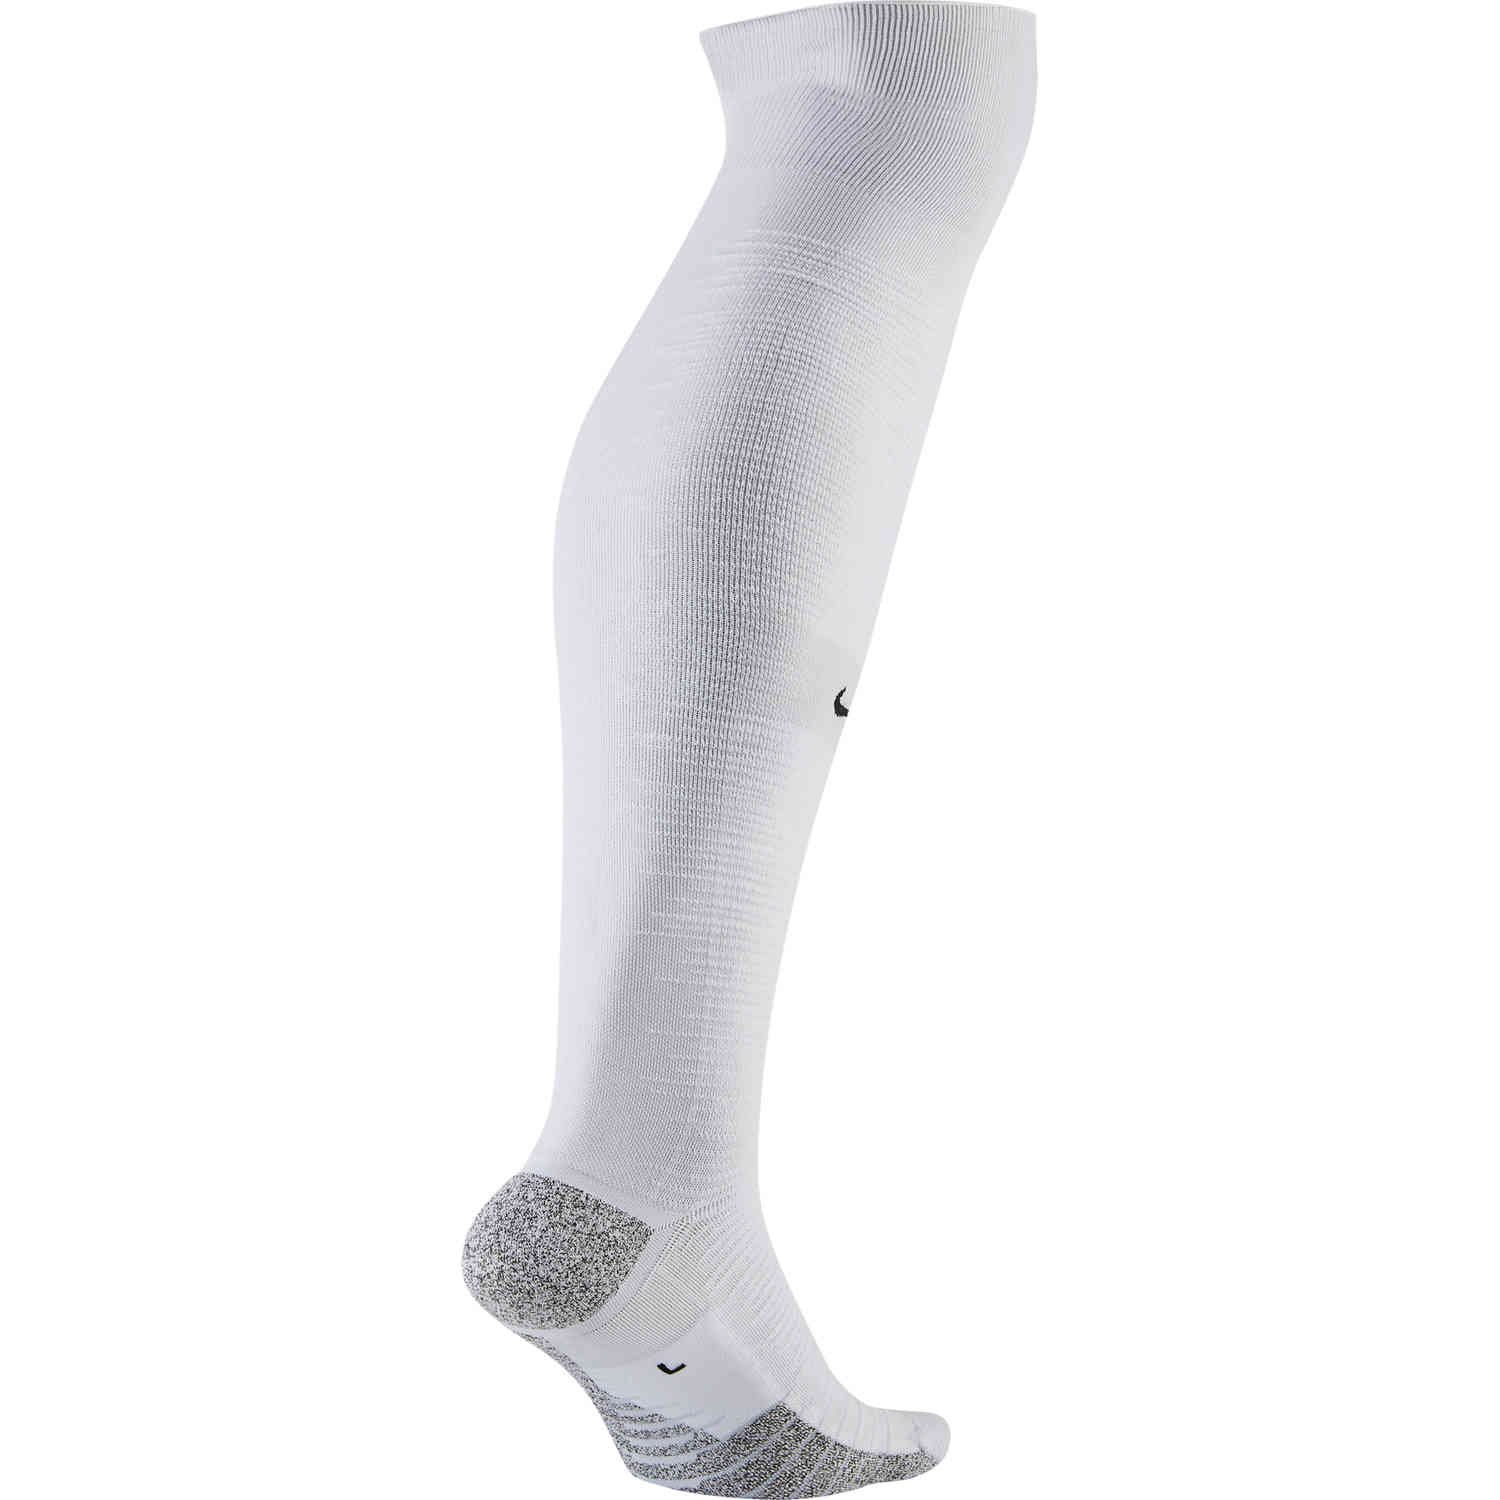 Nike Men's Grip Vapor Strike Crew Socks – Soccer Maxx